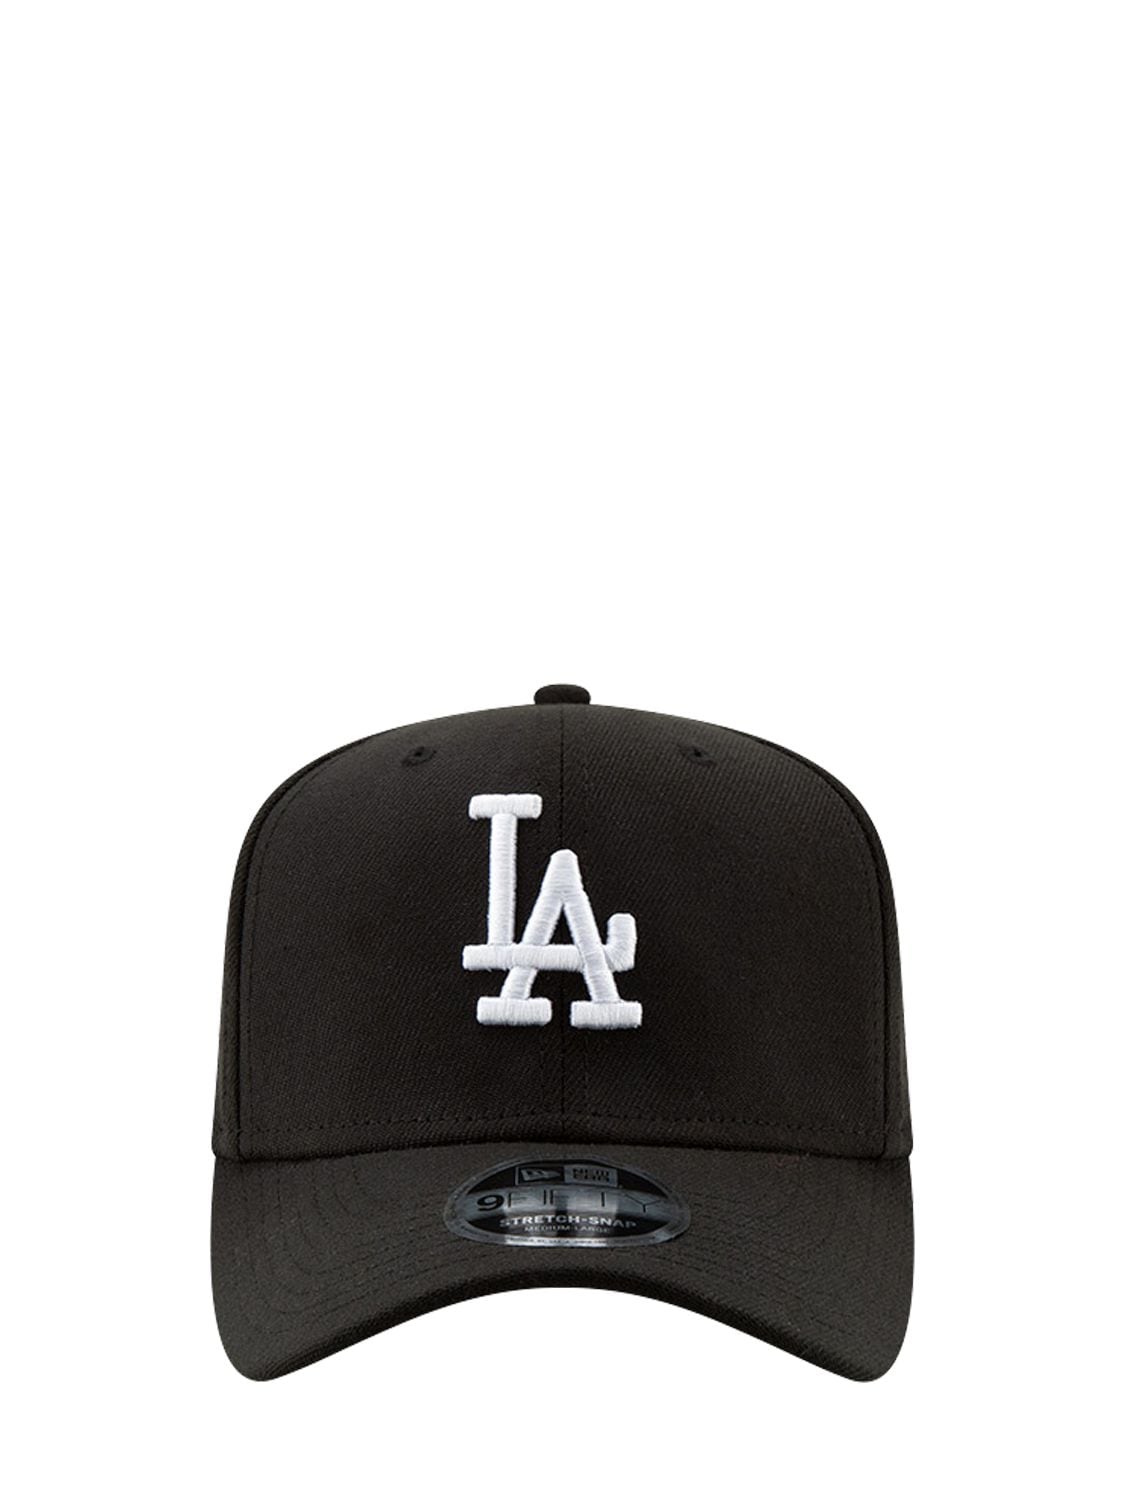 New Era 9fifty Stretch Snap La Dodgers Hat In Black